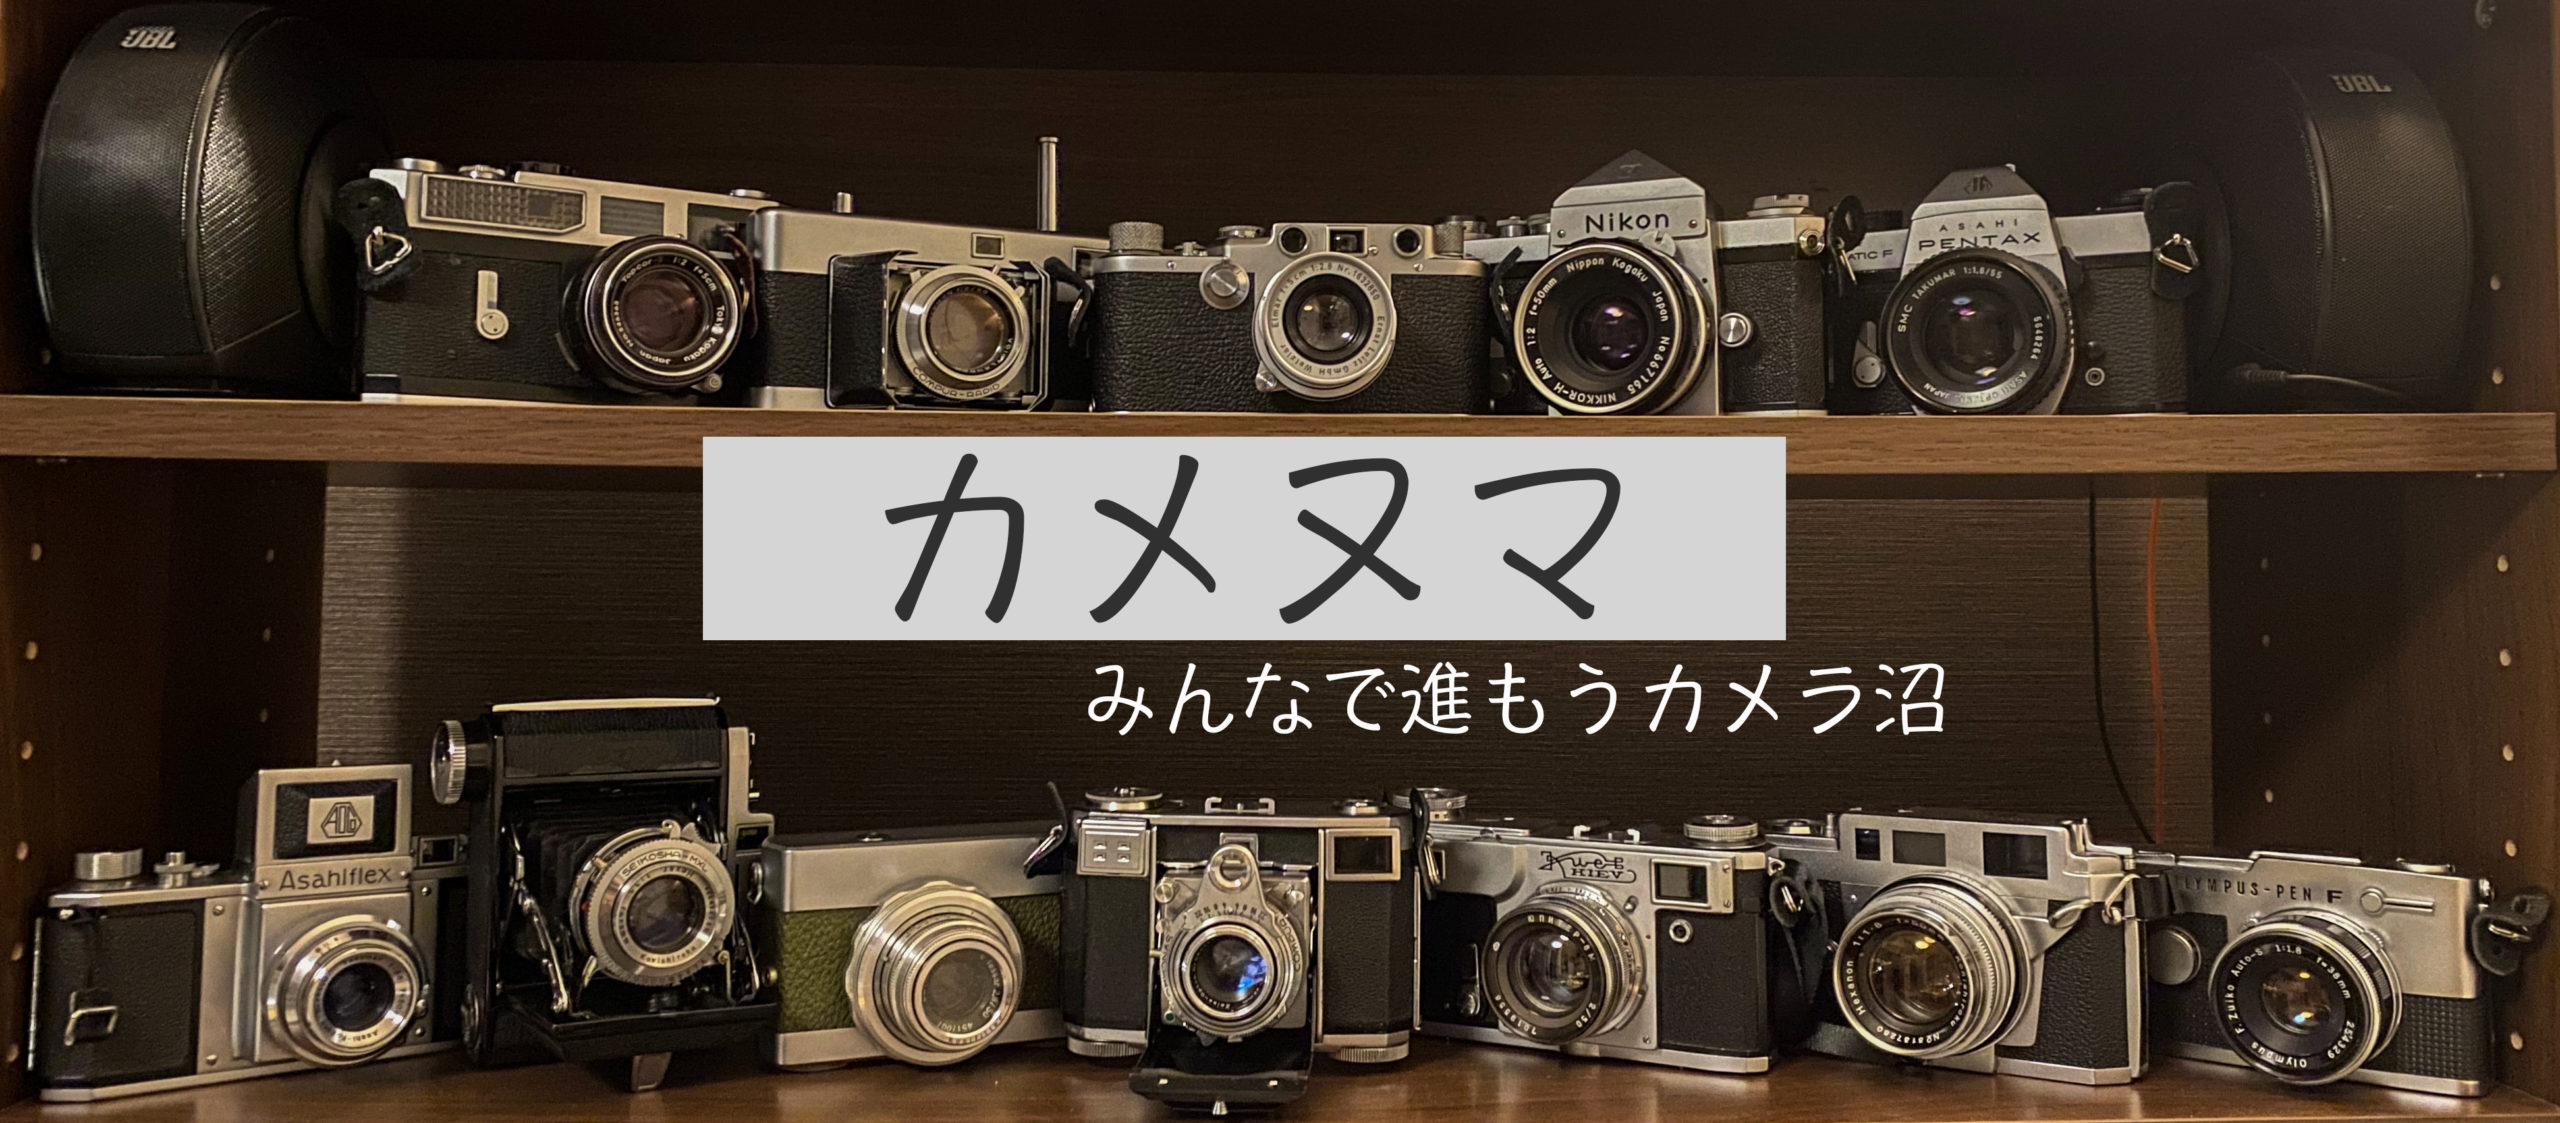 Nikon S2 歴史あるカメラを手にするという意味 | カメヌマ